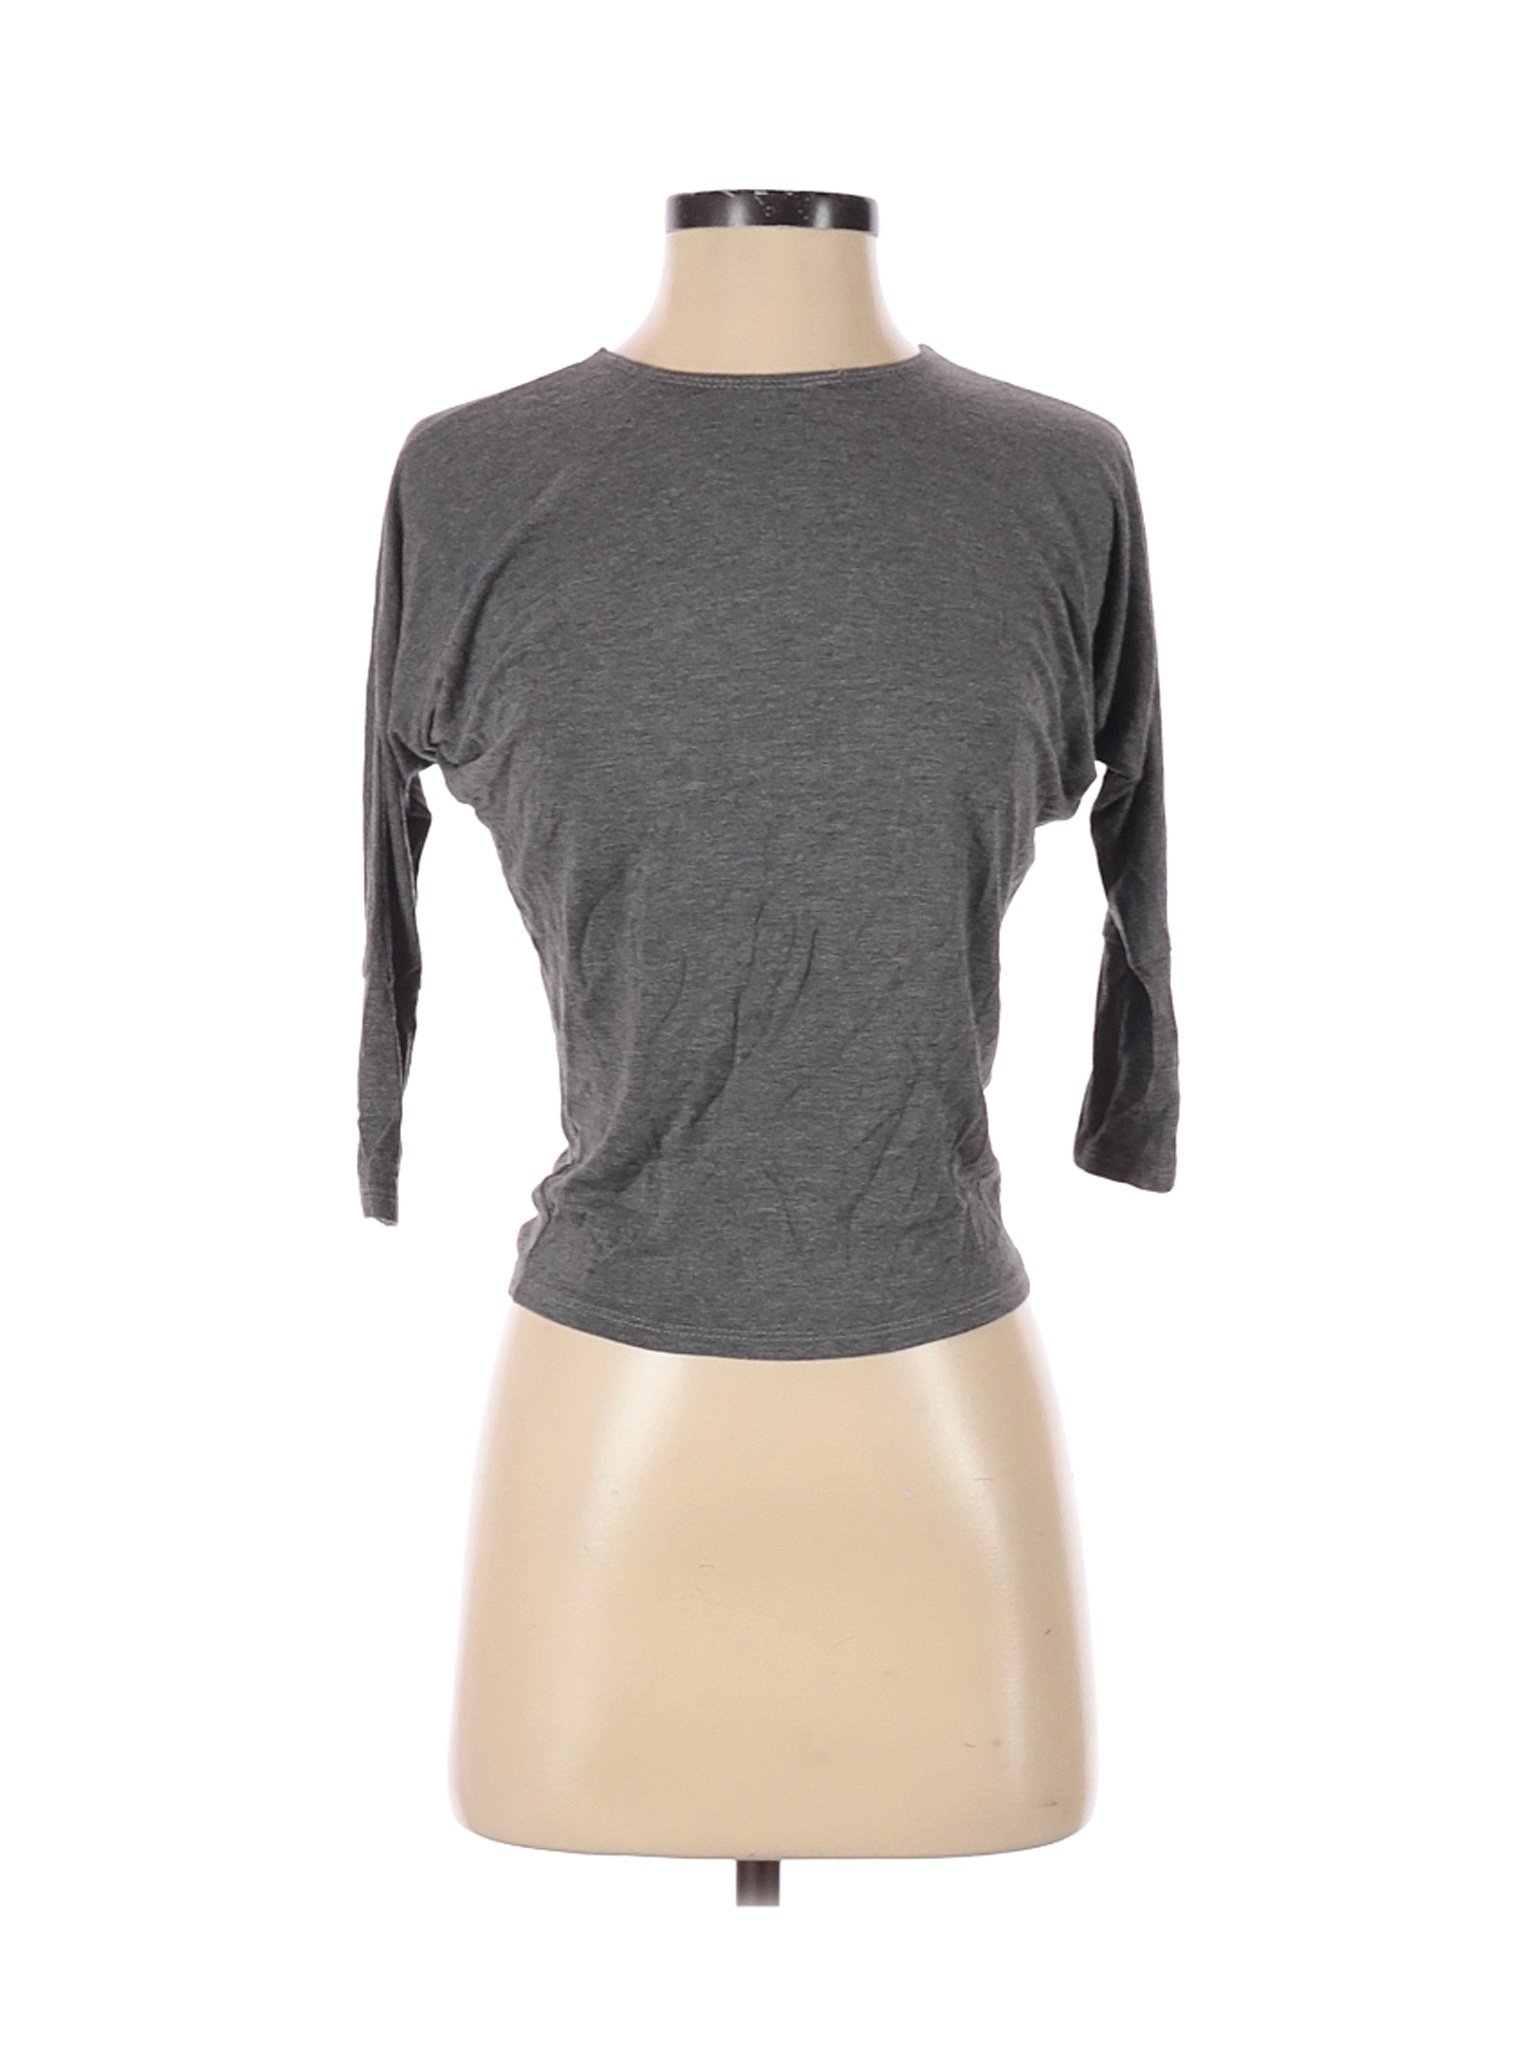 Pomelo Women Gray 3/4 Sleeve T-Shirt S | eBay